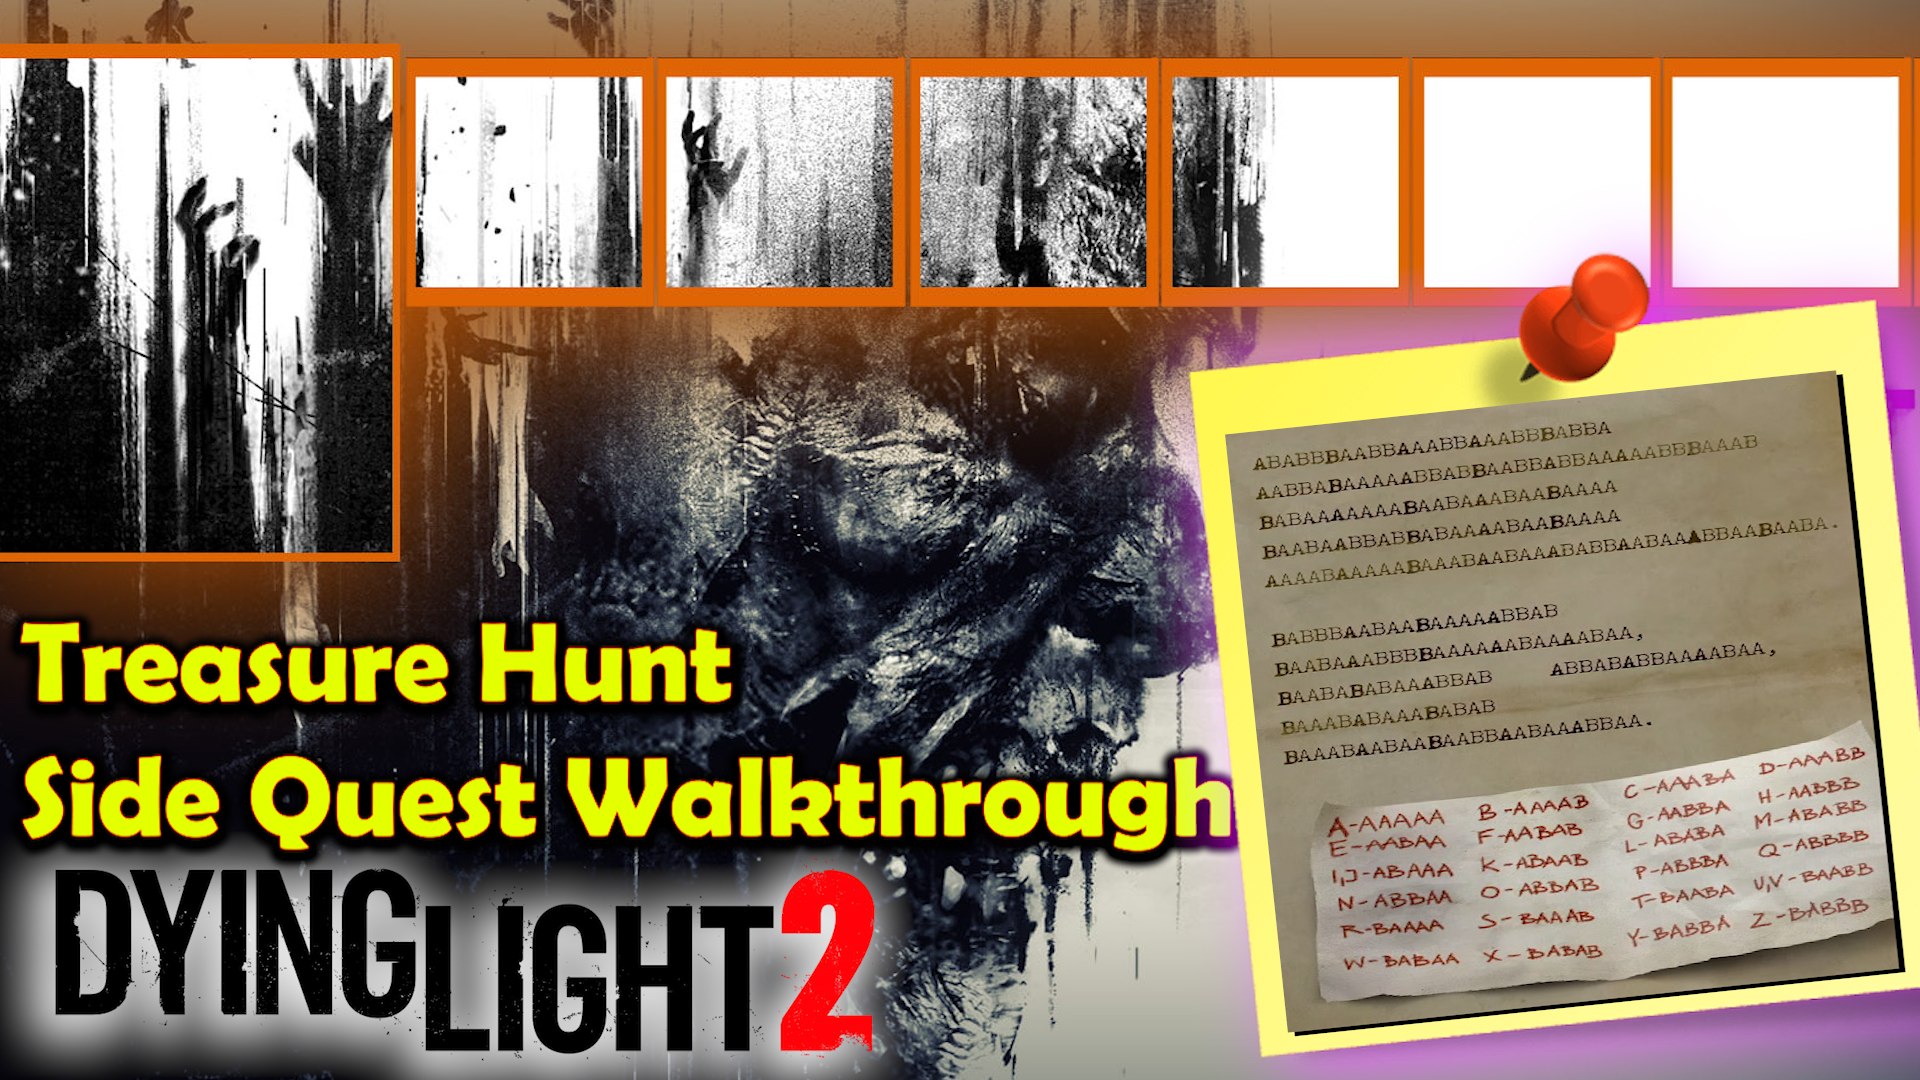 Dying Light 2 - Treasure Hunt Side Quest Walkthrough - video Dailymotion